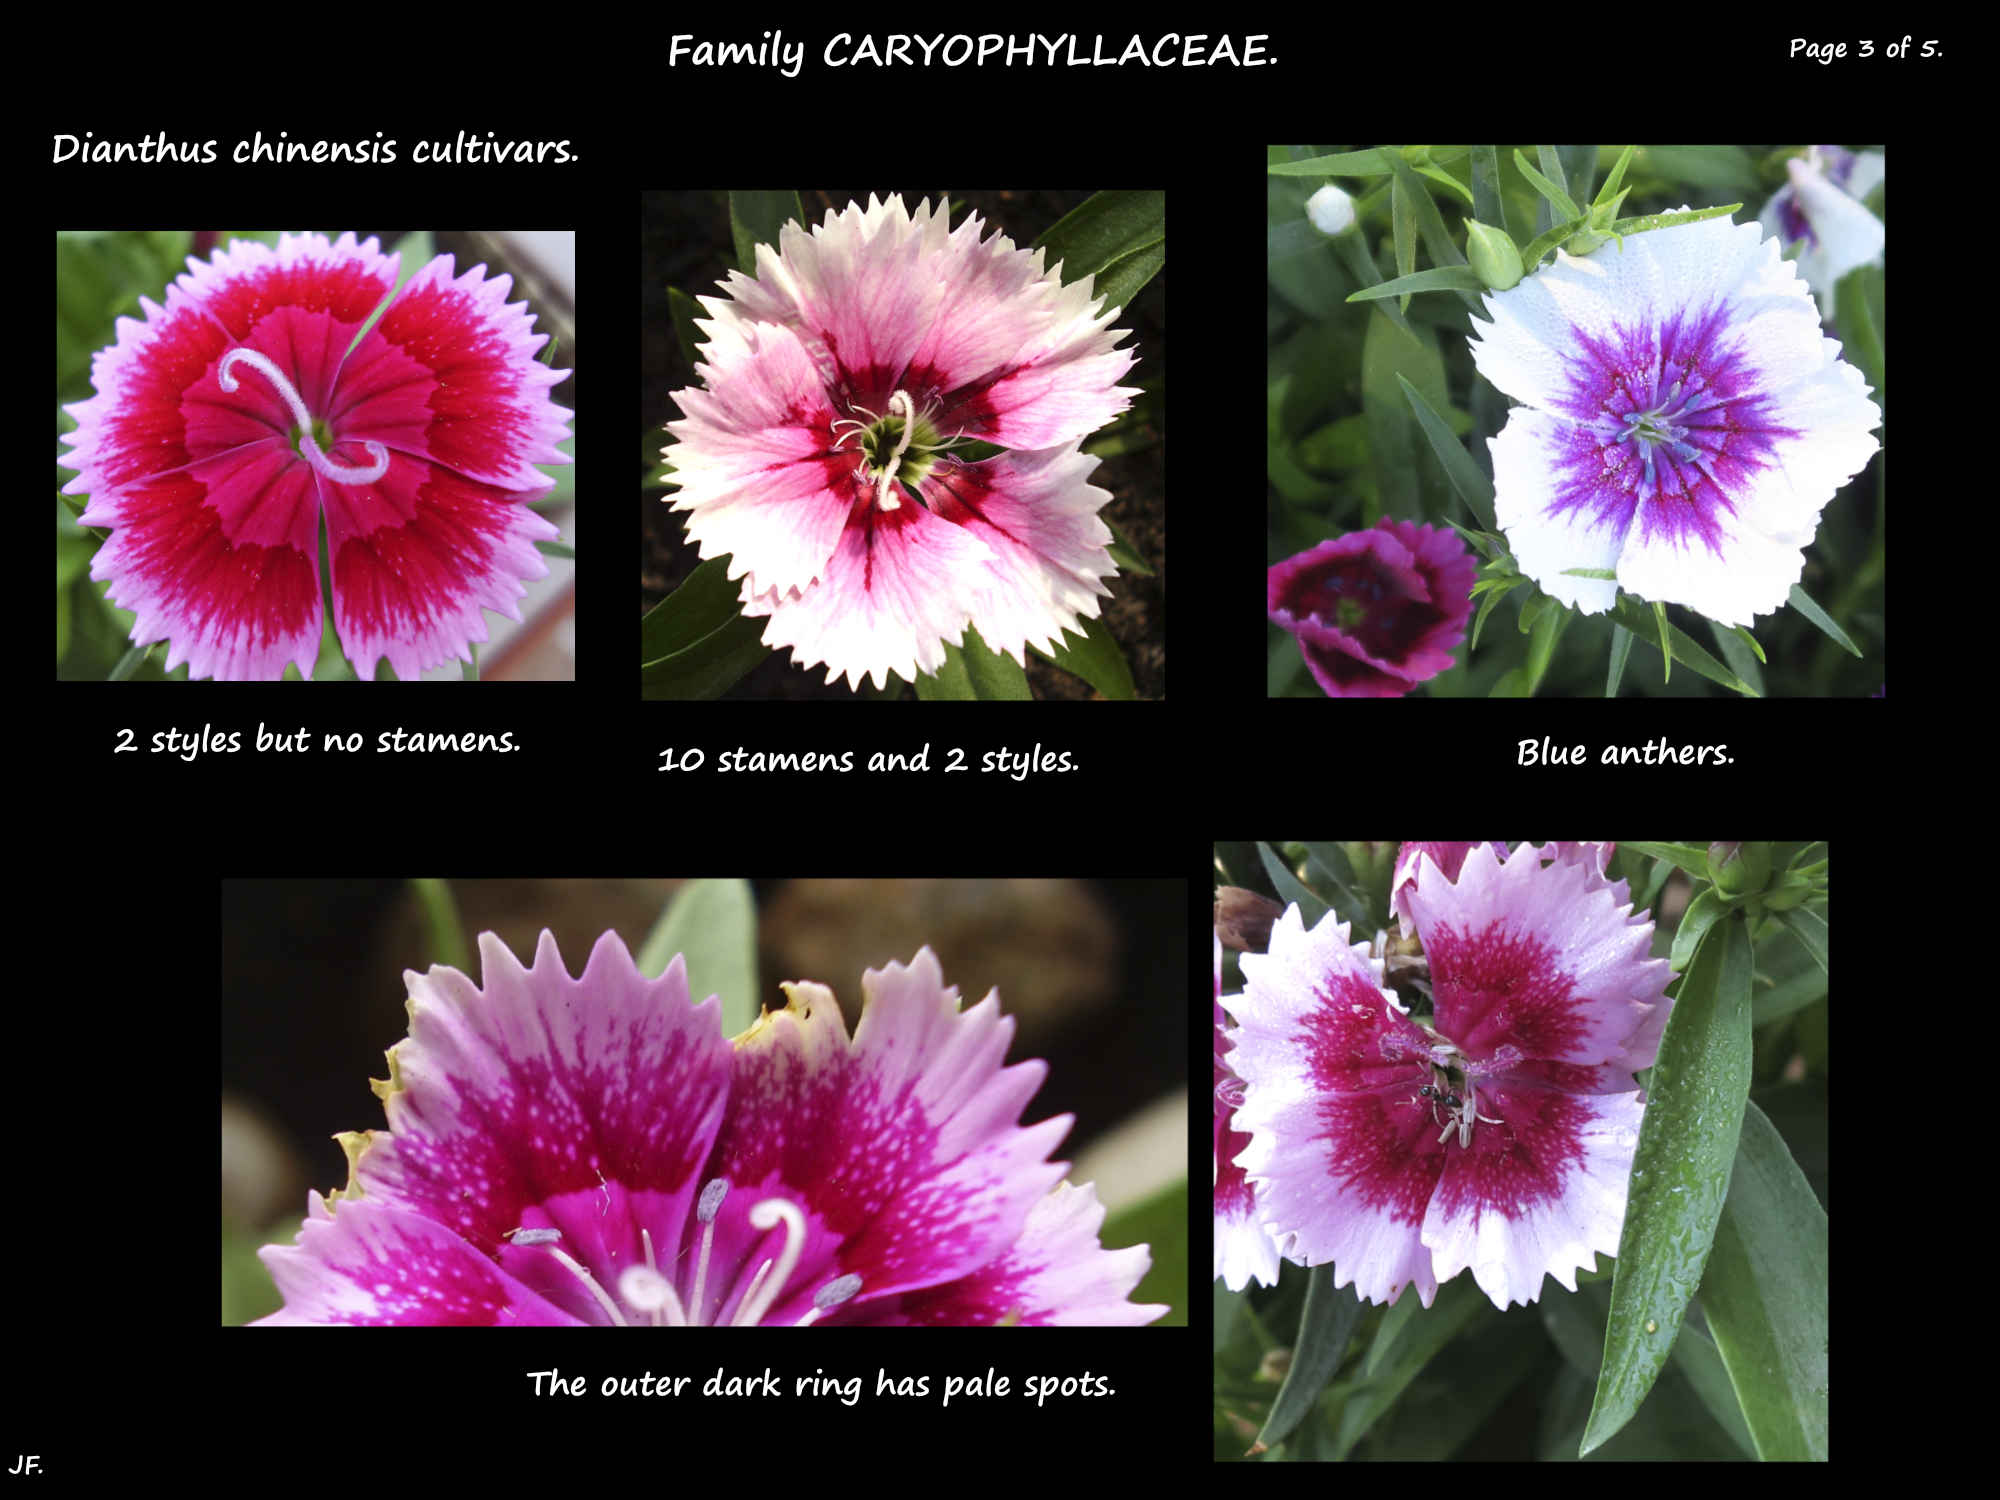 3 Rainbow pinks cultivars